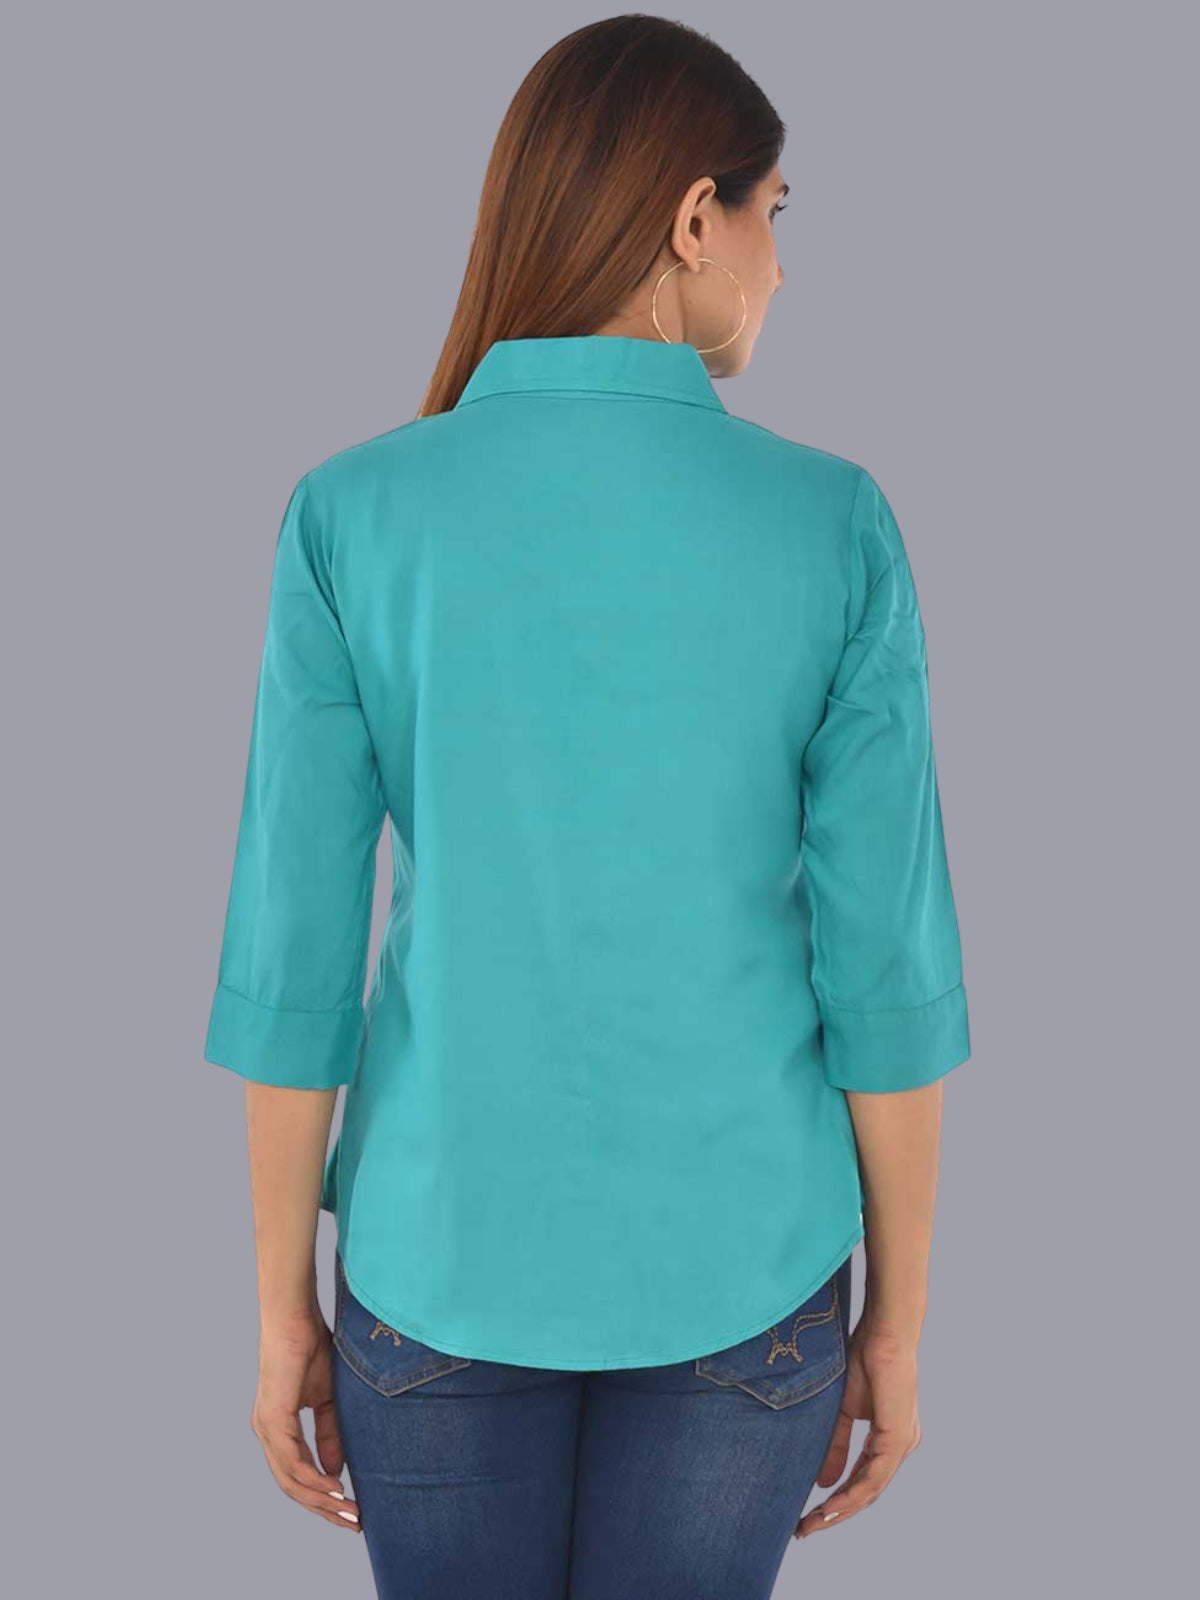 Womens Solid Sky Blue Regular Fit Spread Collar Rayon Shirt